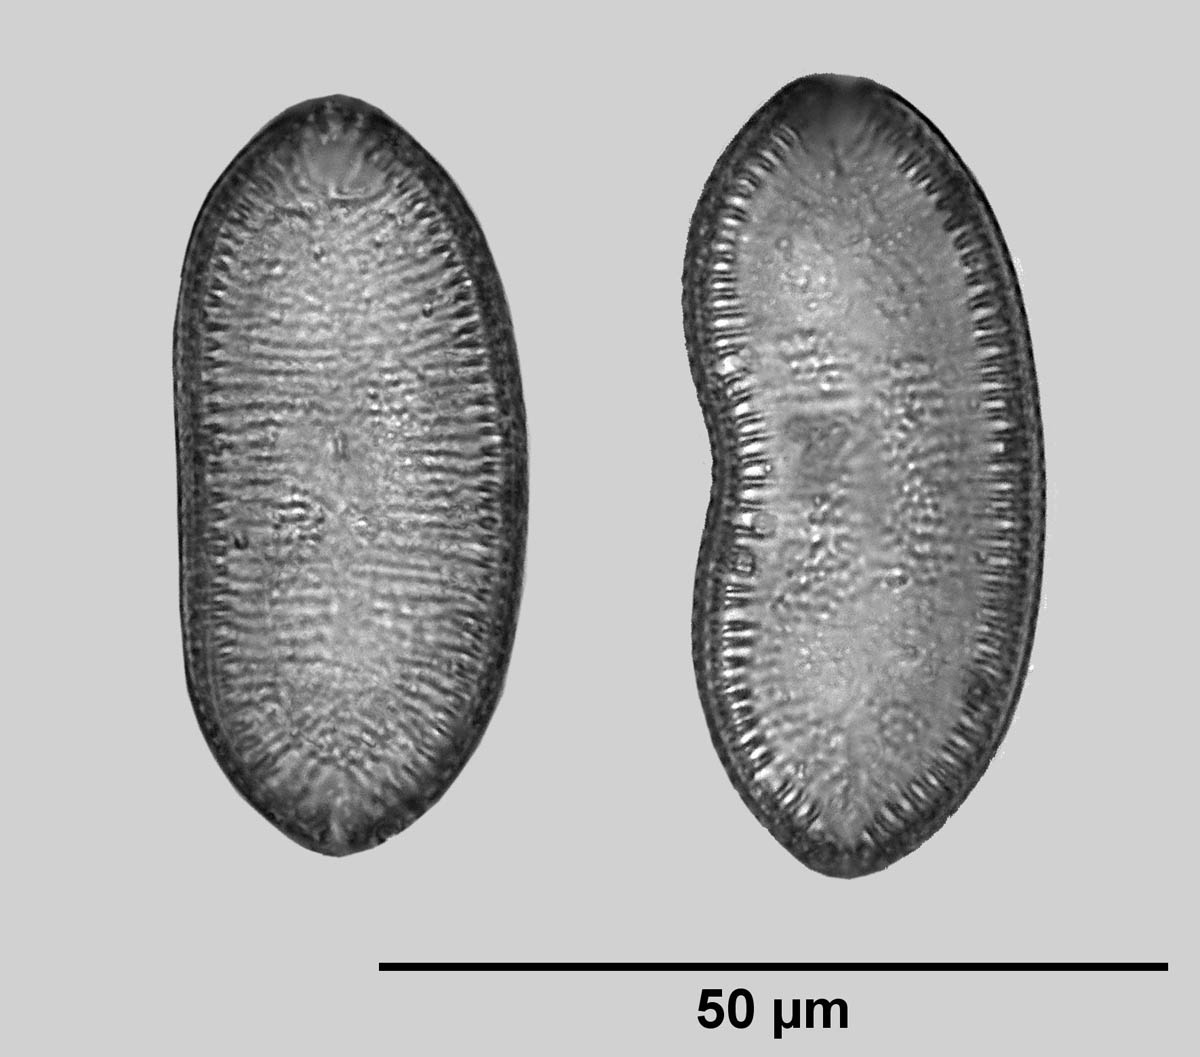 Valves of malformed diatoms